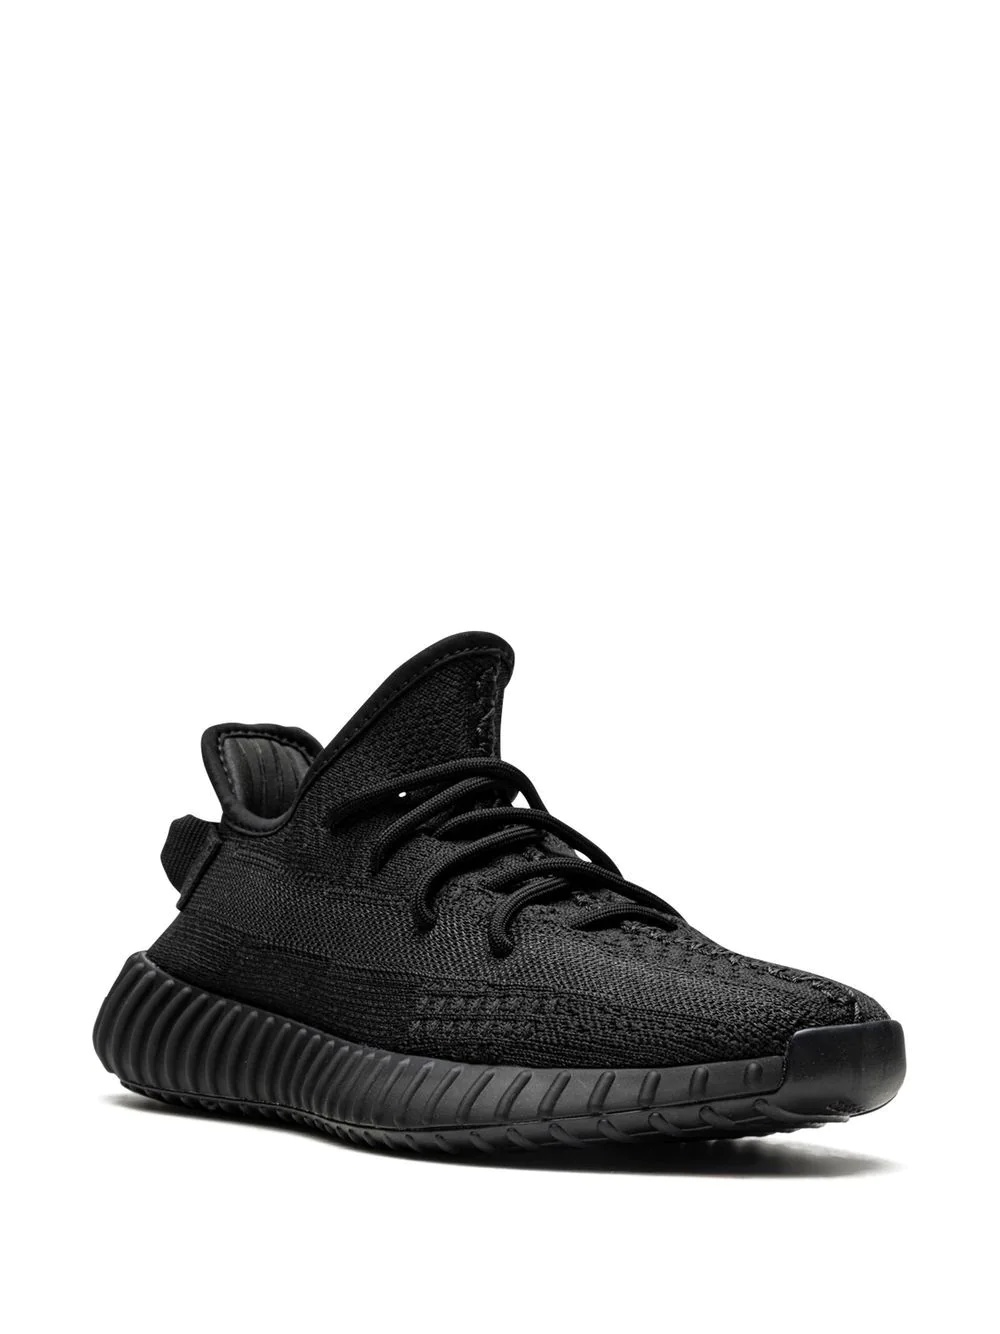 Yeezy Boost 350 V2 "Onyx" sneakers - 2